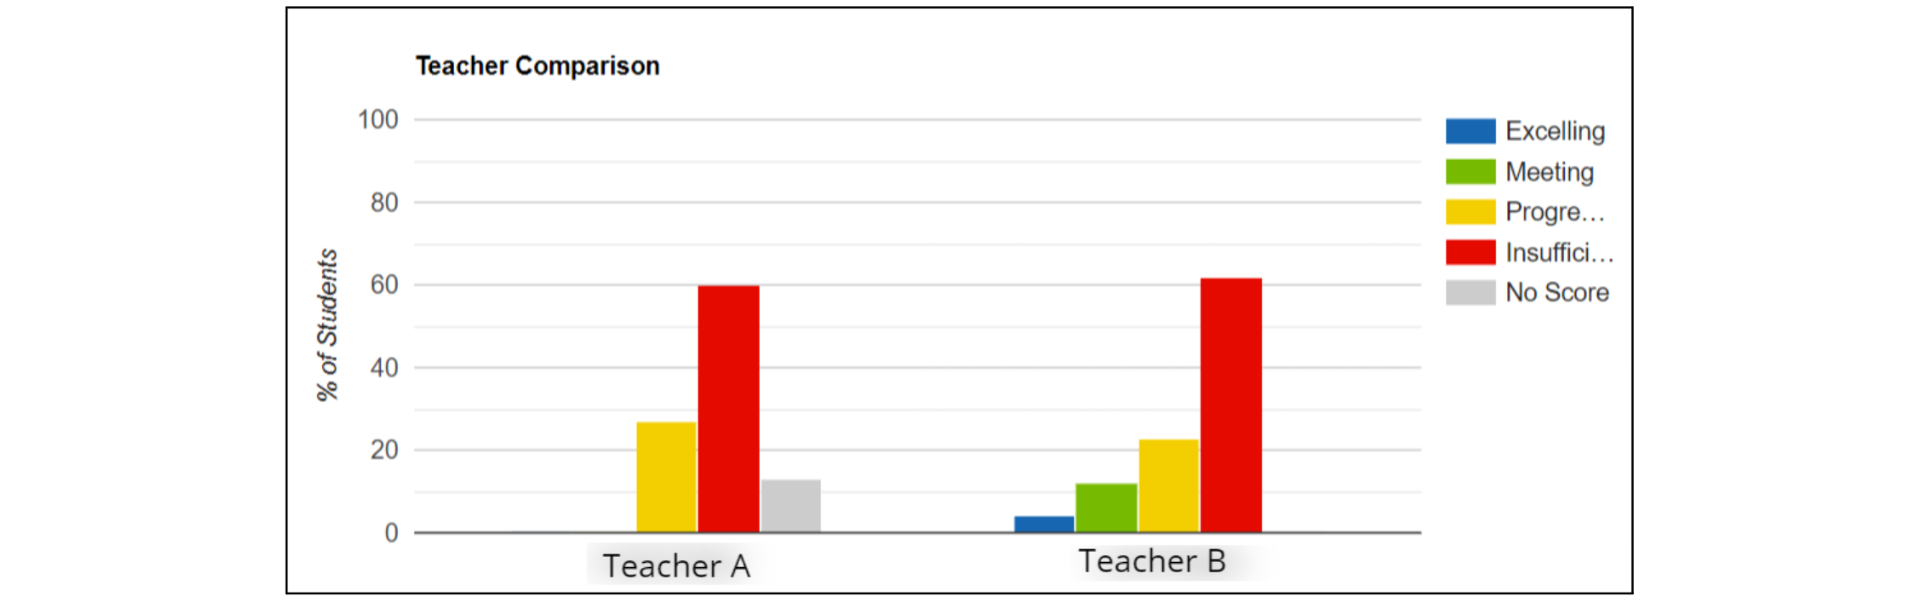 teacher comparison data